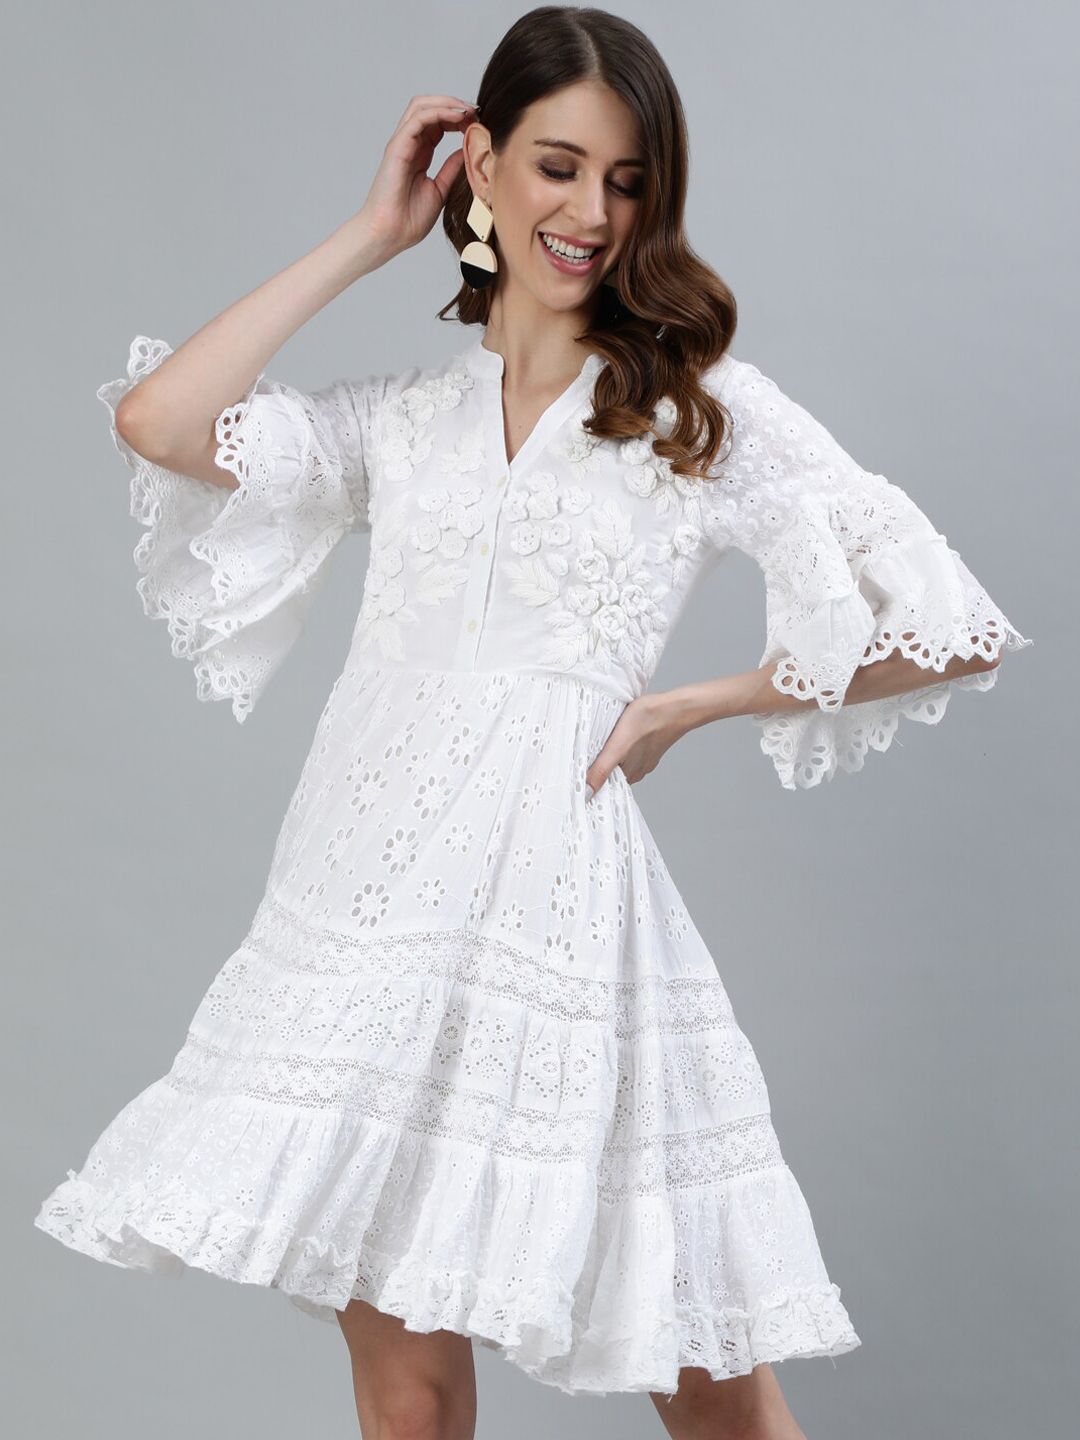 Ishin White Schiffli Embroidered A-Line Dress Price in India